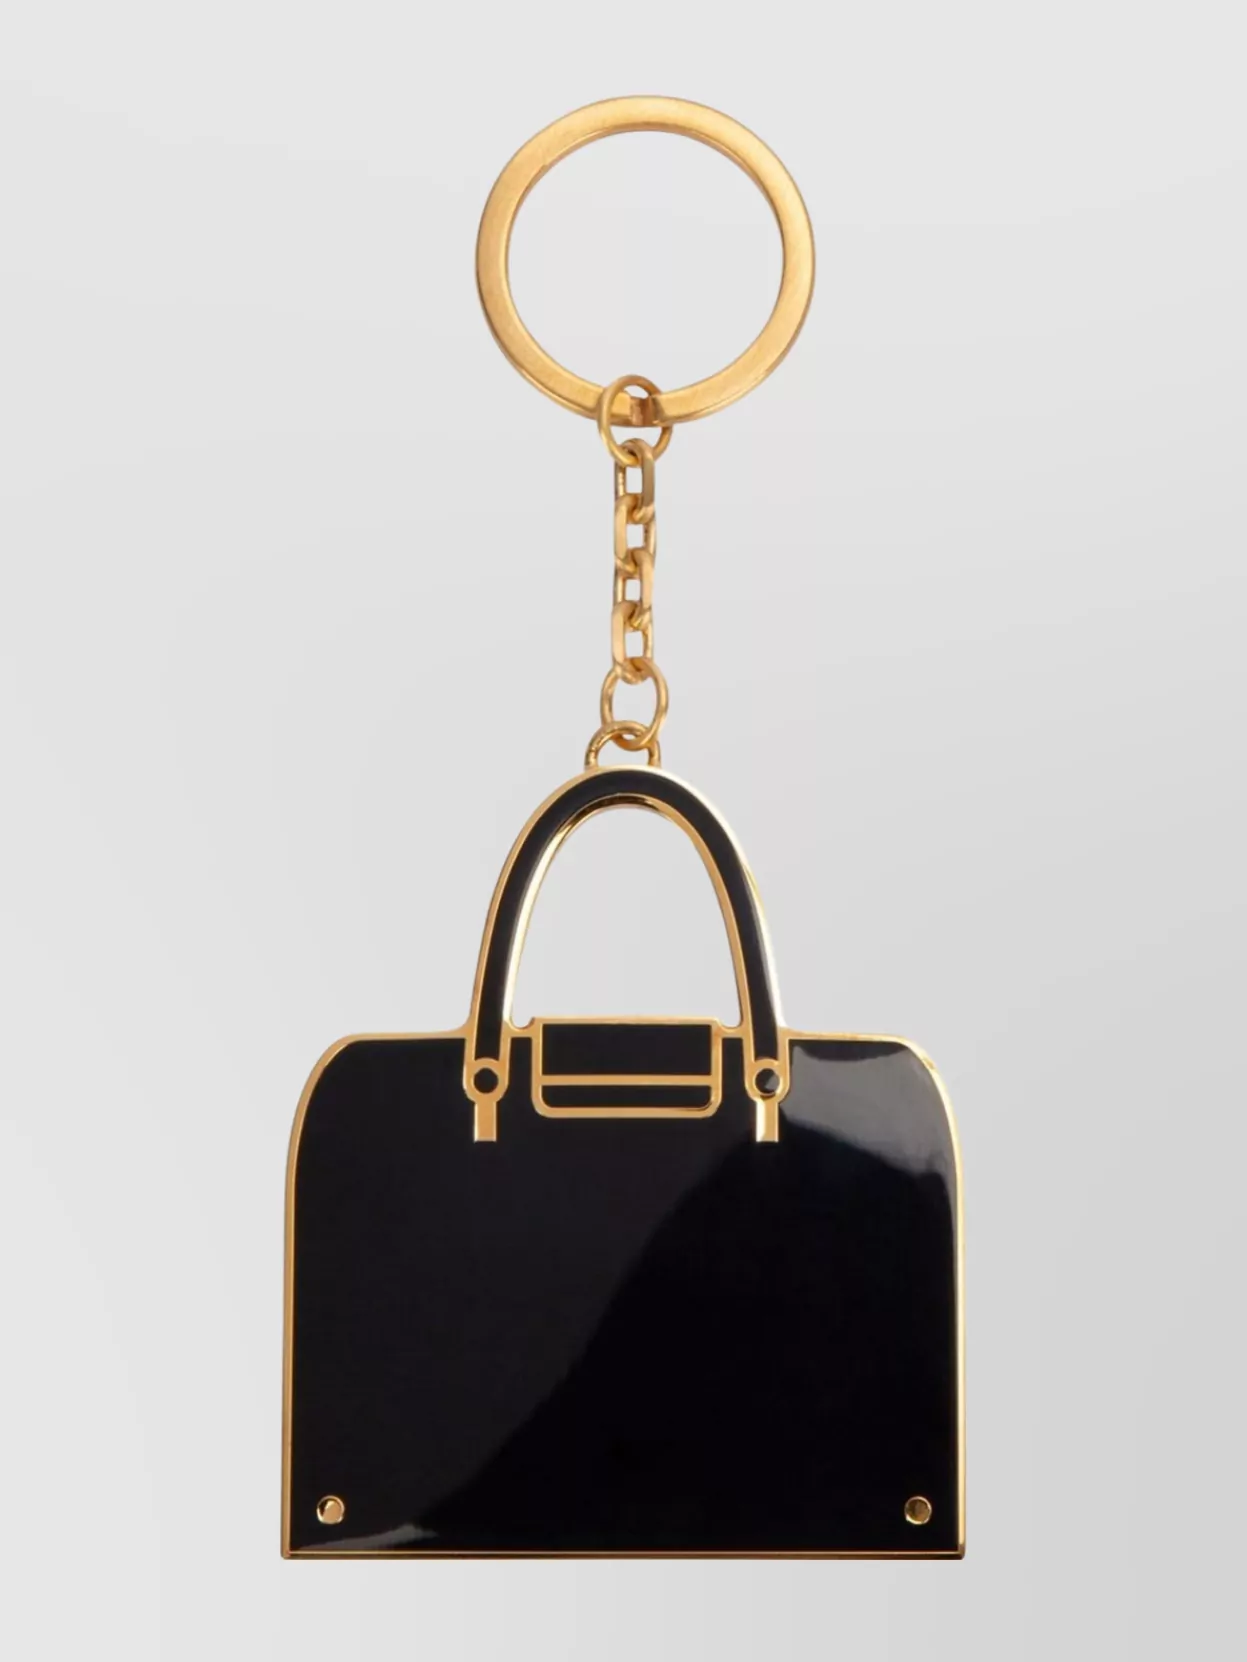 Thom Browne Keychain Bag Charm Gold Chain Link